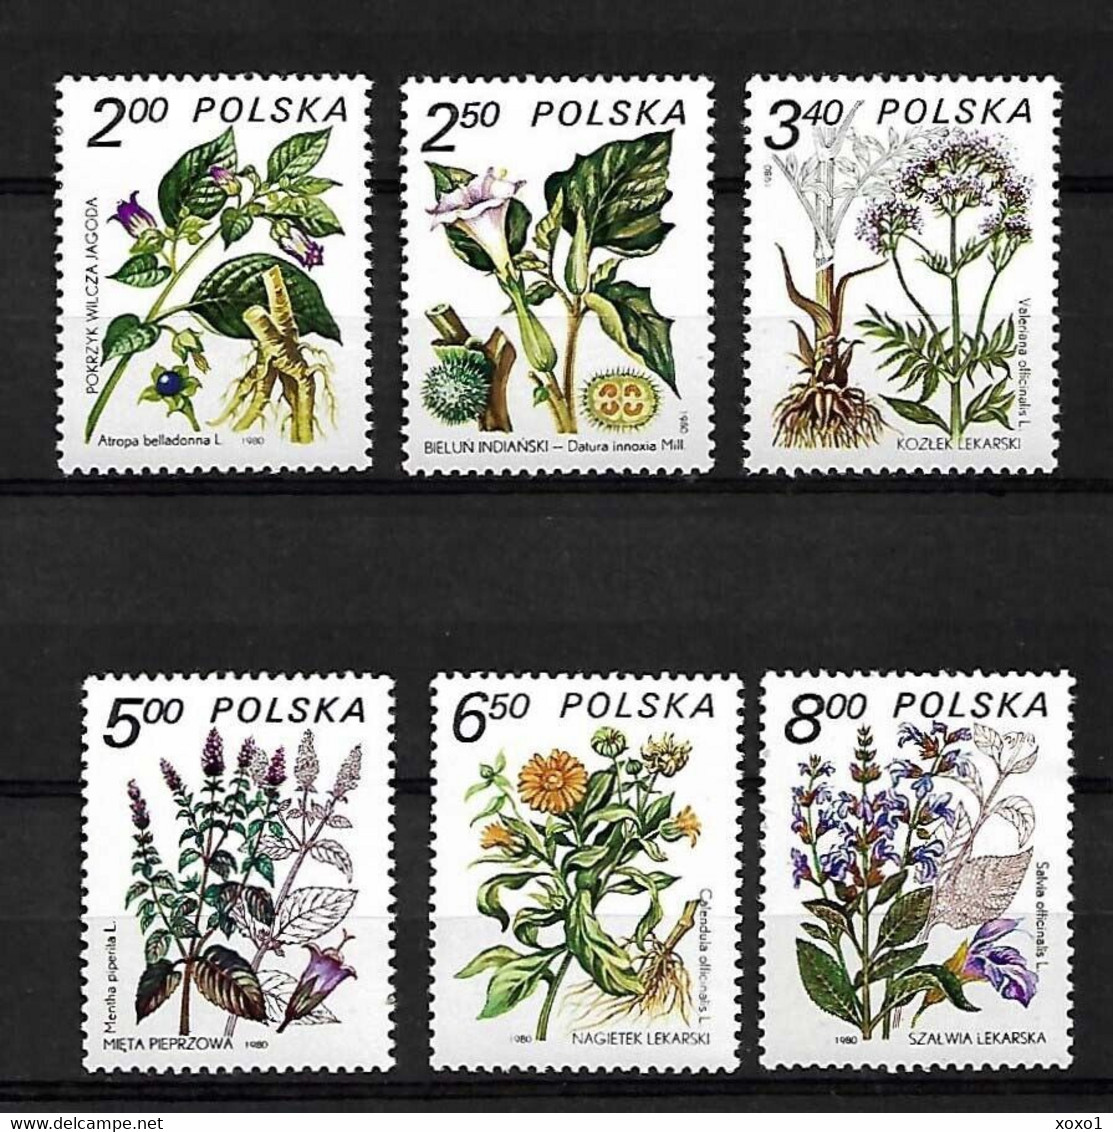 Poland 1980 MiNr. 2706 - 2711 Polen Medicinal Plants 6v MNH**  3.00 € - Plantes Médicinales